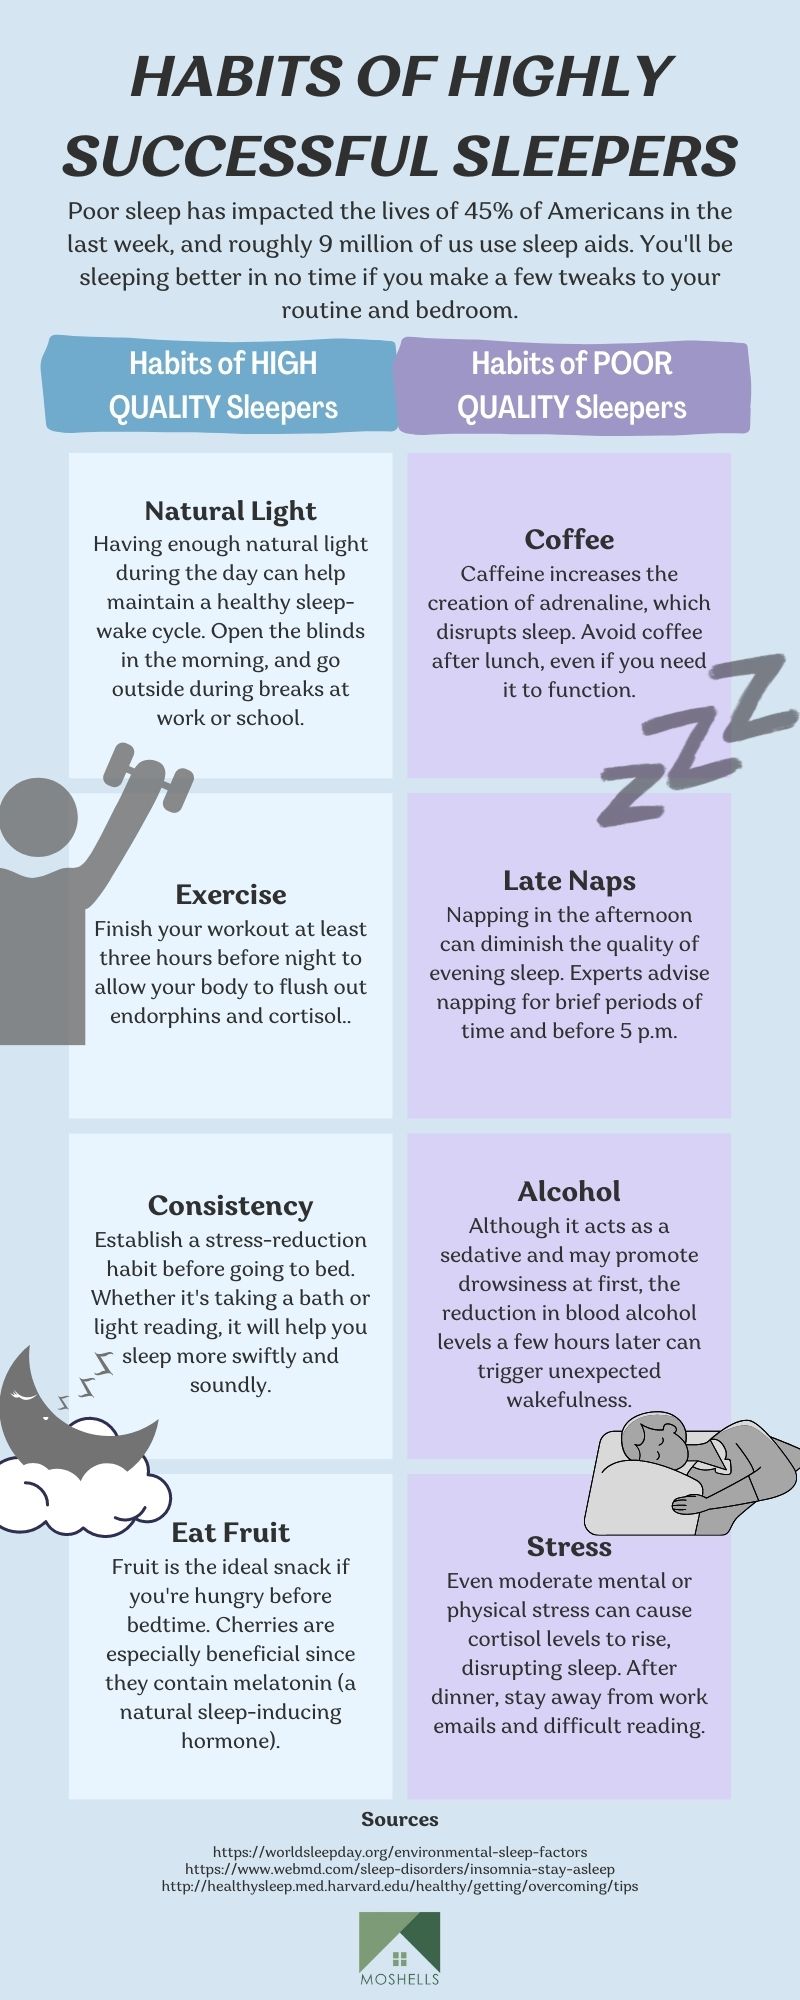 Infographic displaying habits that produce high quality sleep versus low quality sleep